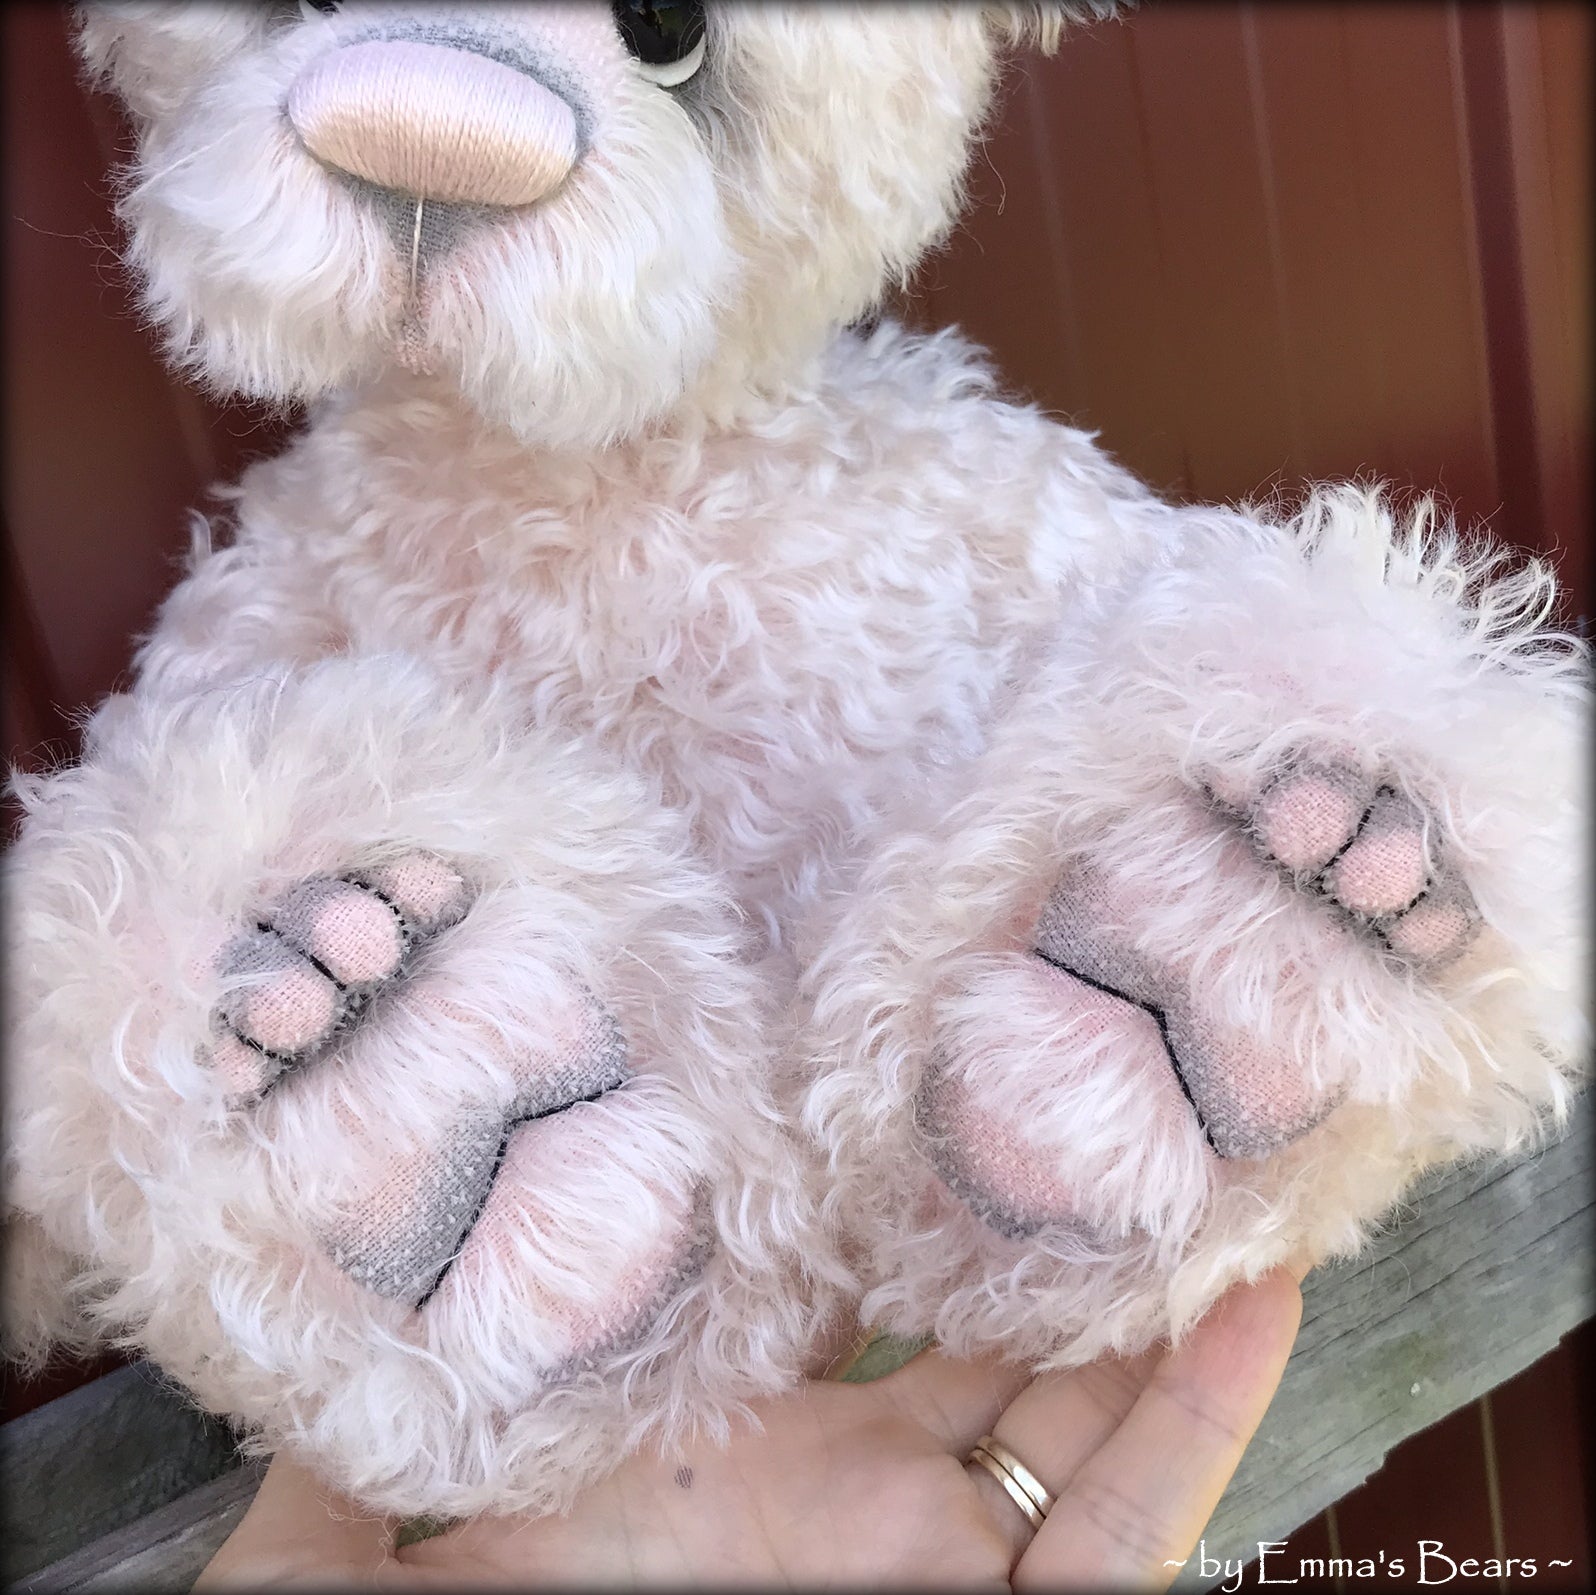 Toddler Madison Mavis - 18in hand-dyed pink MOHAIR Artist Bear by Emmas Bears - OOAK